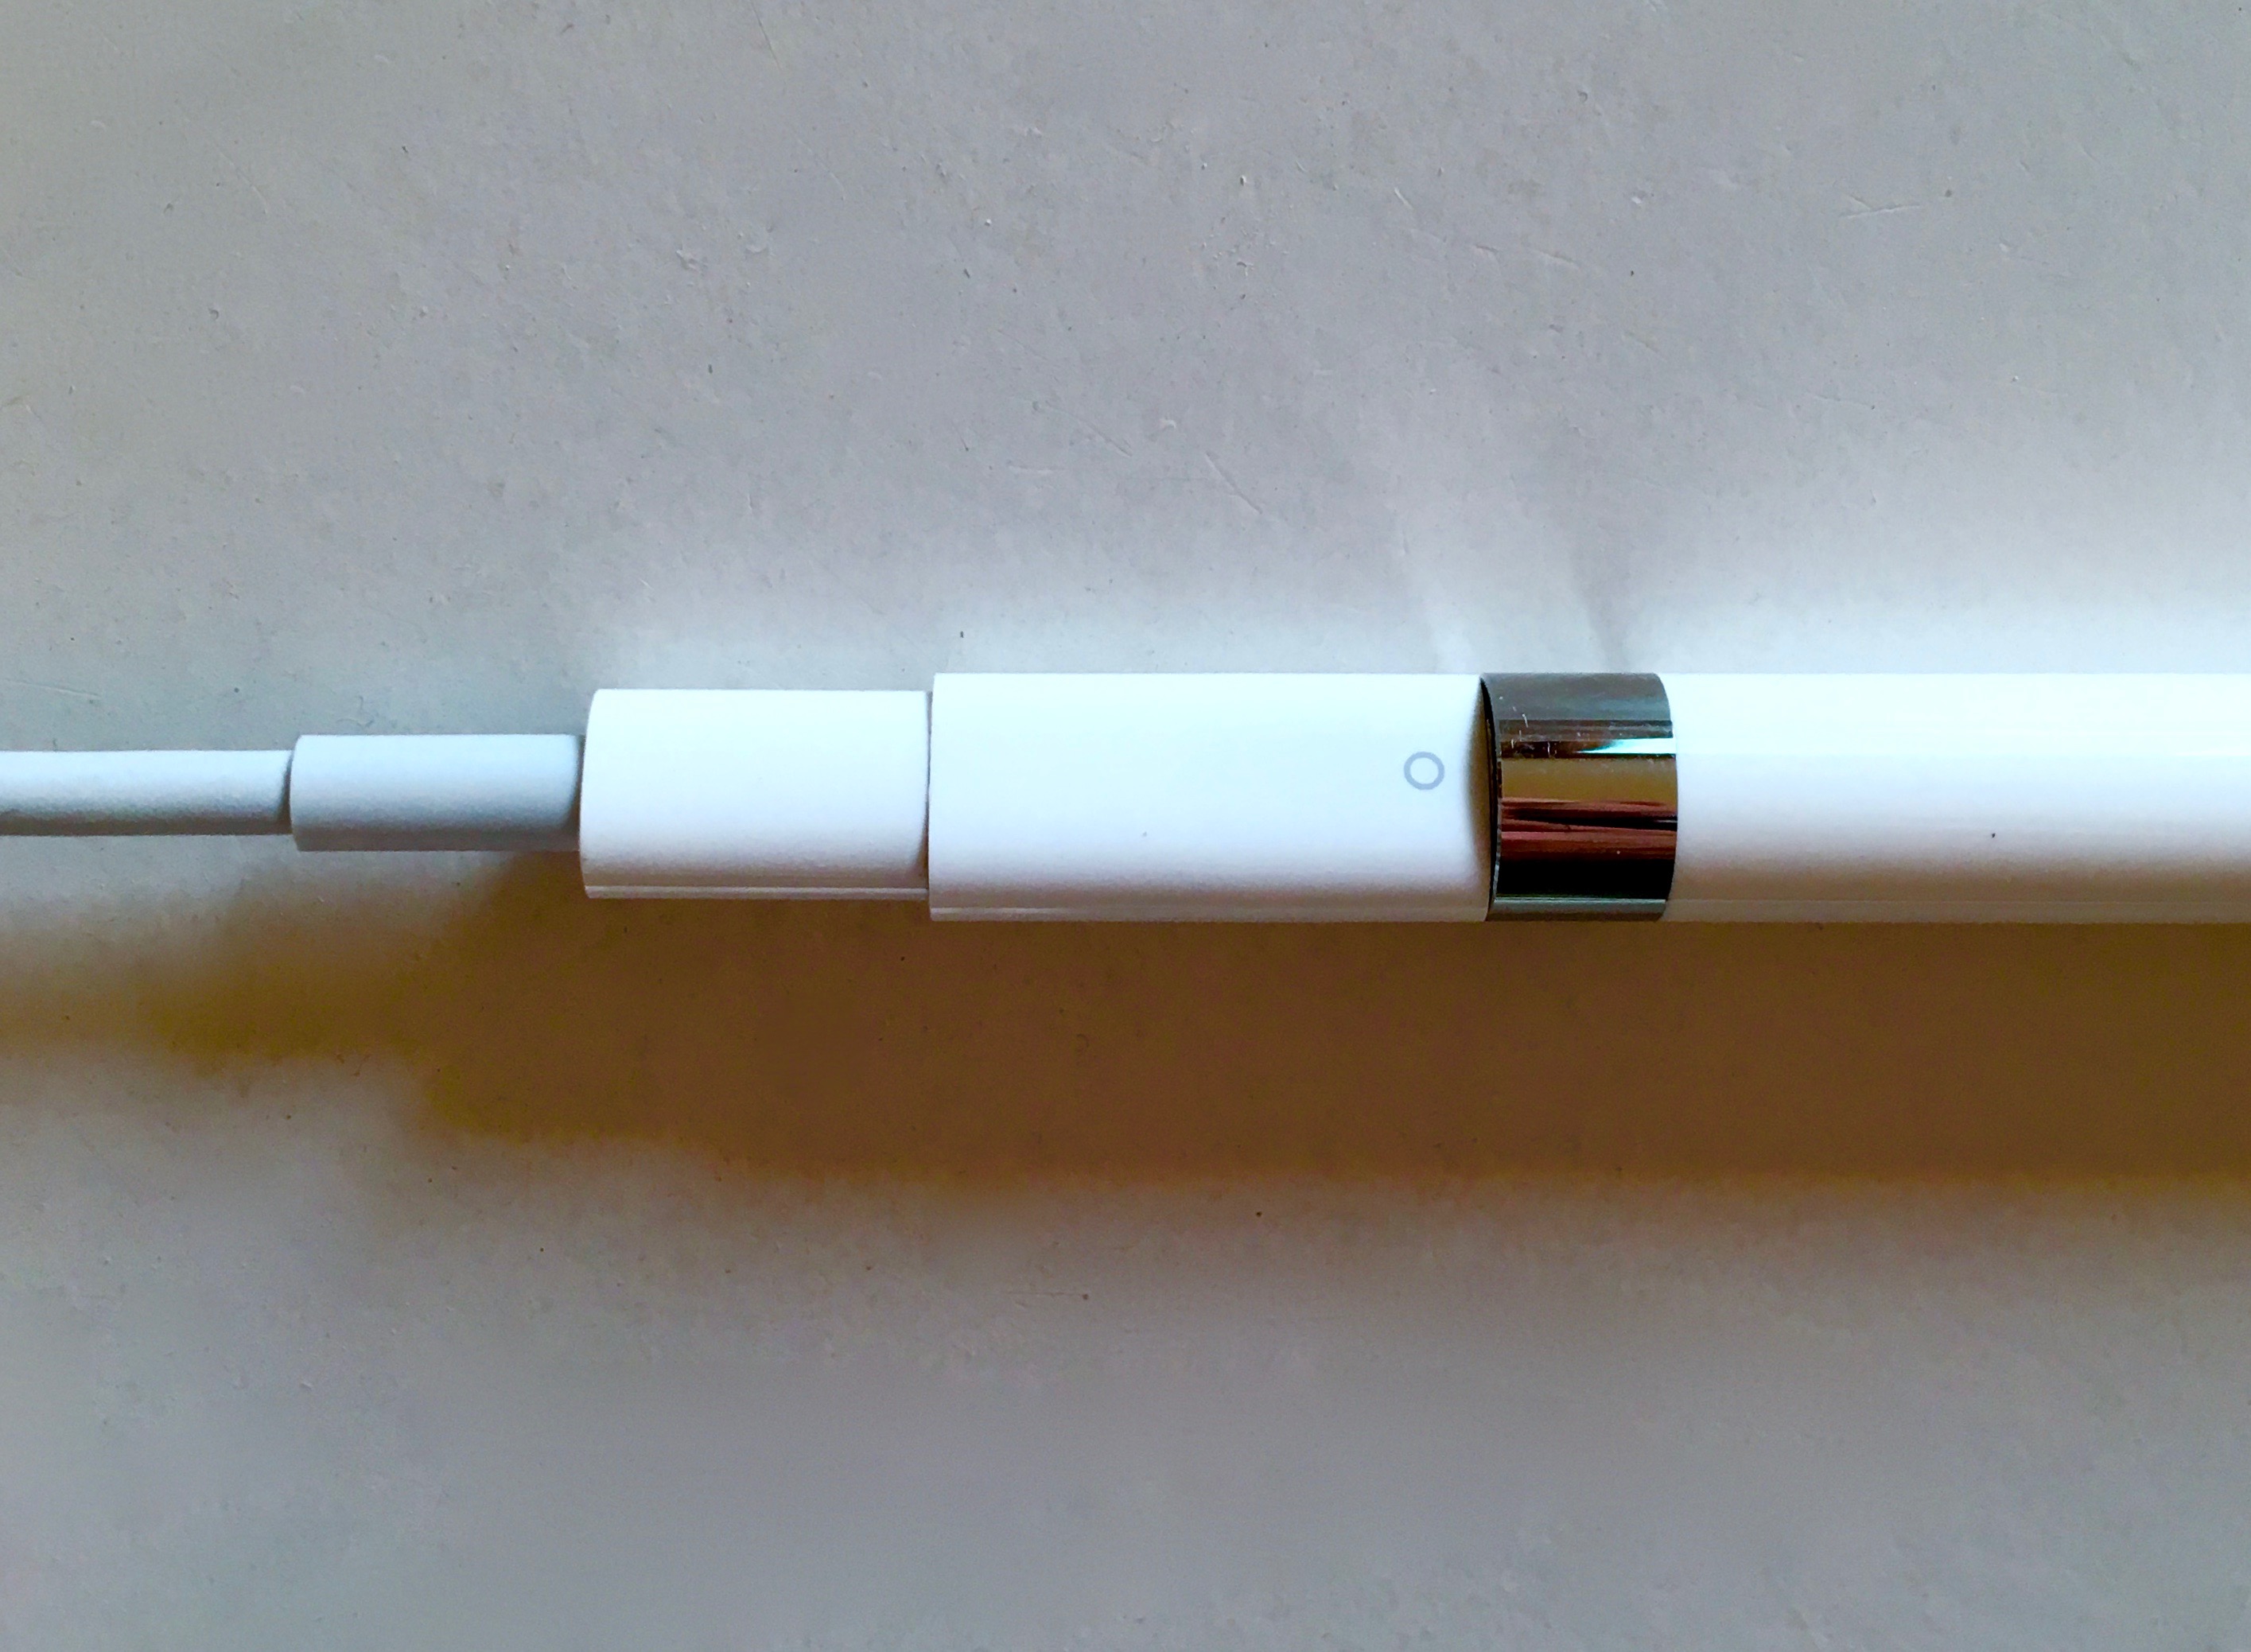 Charging Apple Pencil